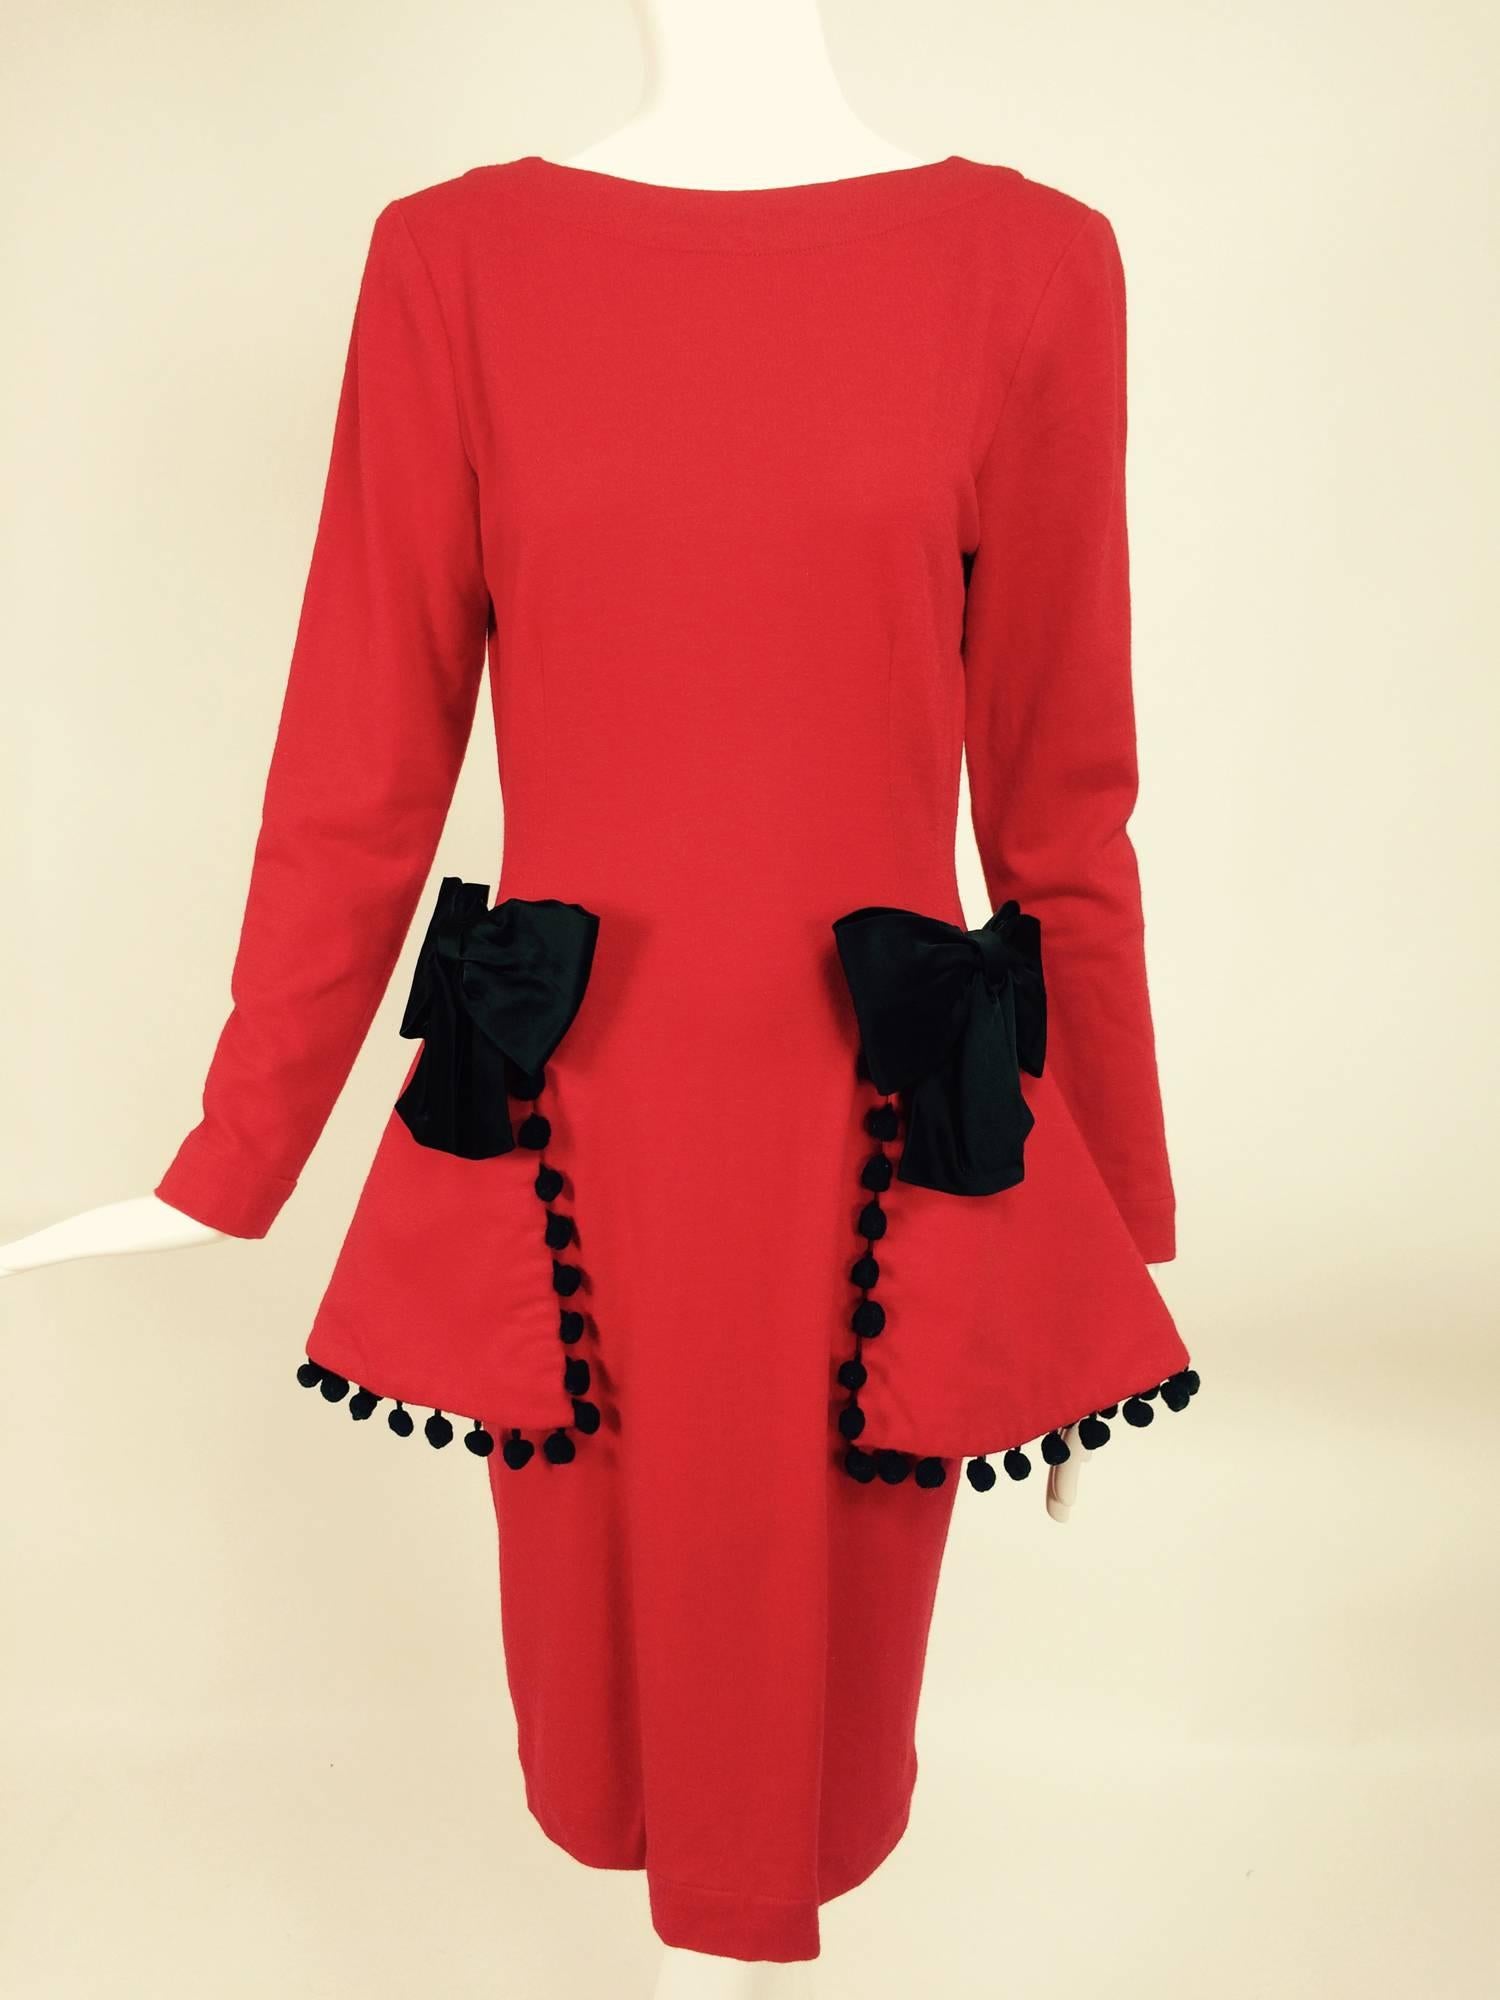 Isabelle Allard Paris red jersey dress with peplum hip bows & pom poms 1990s 2